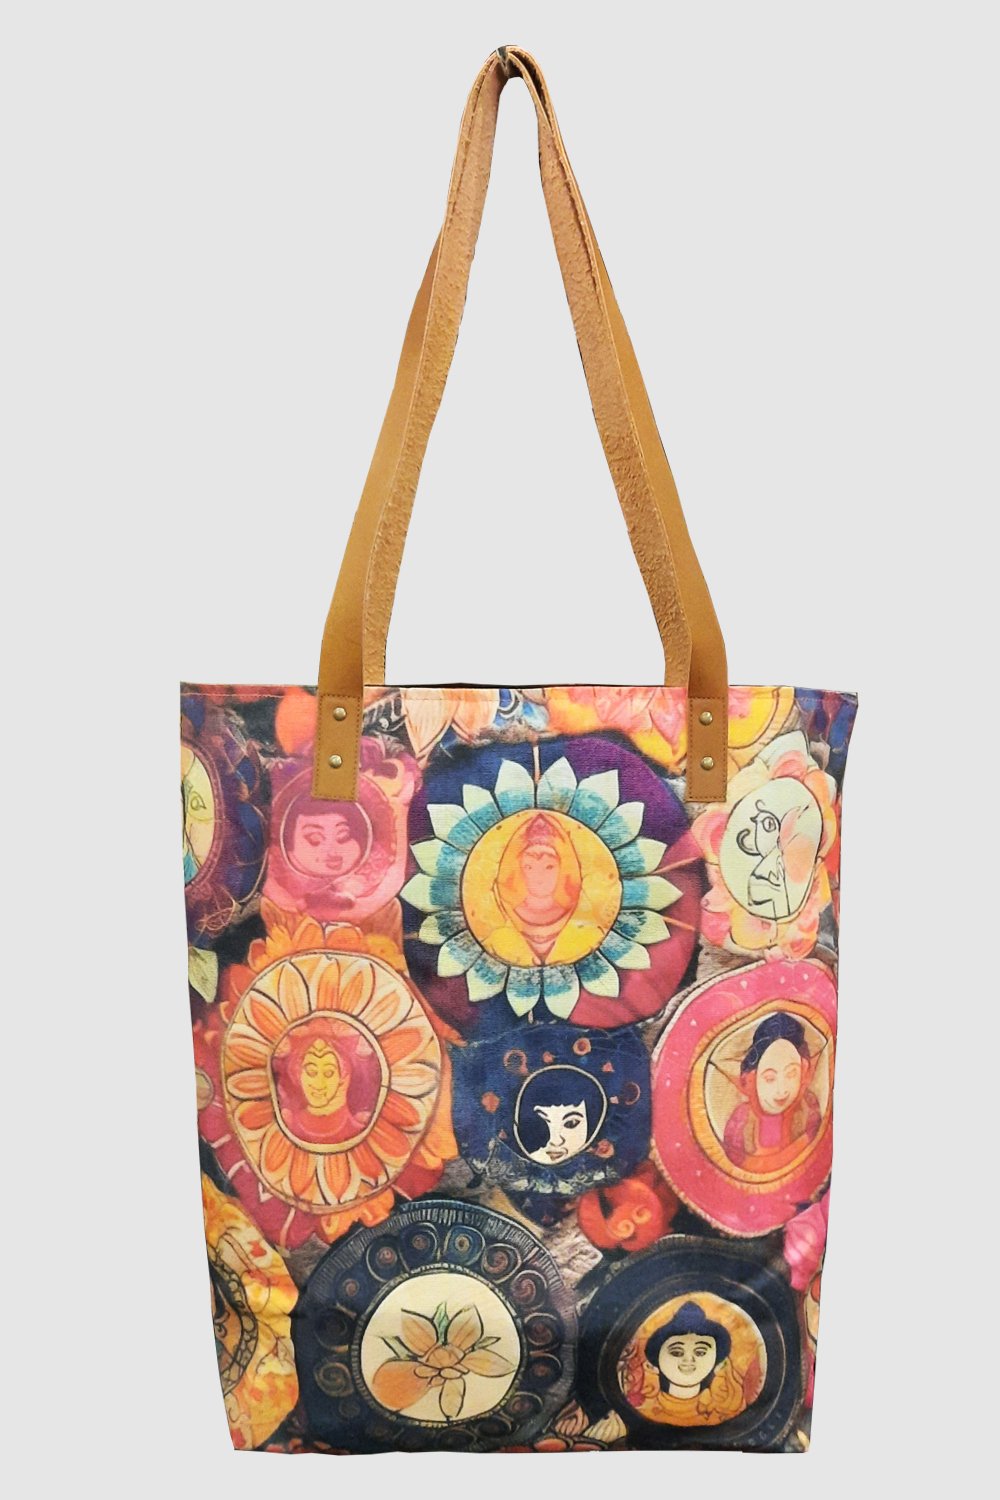 Ethnic Tote Bag / Canvas Tote Bag